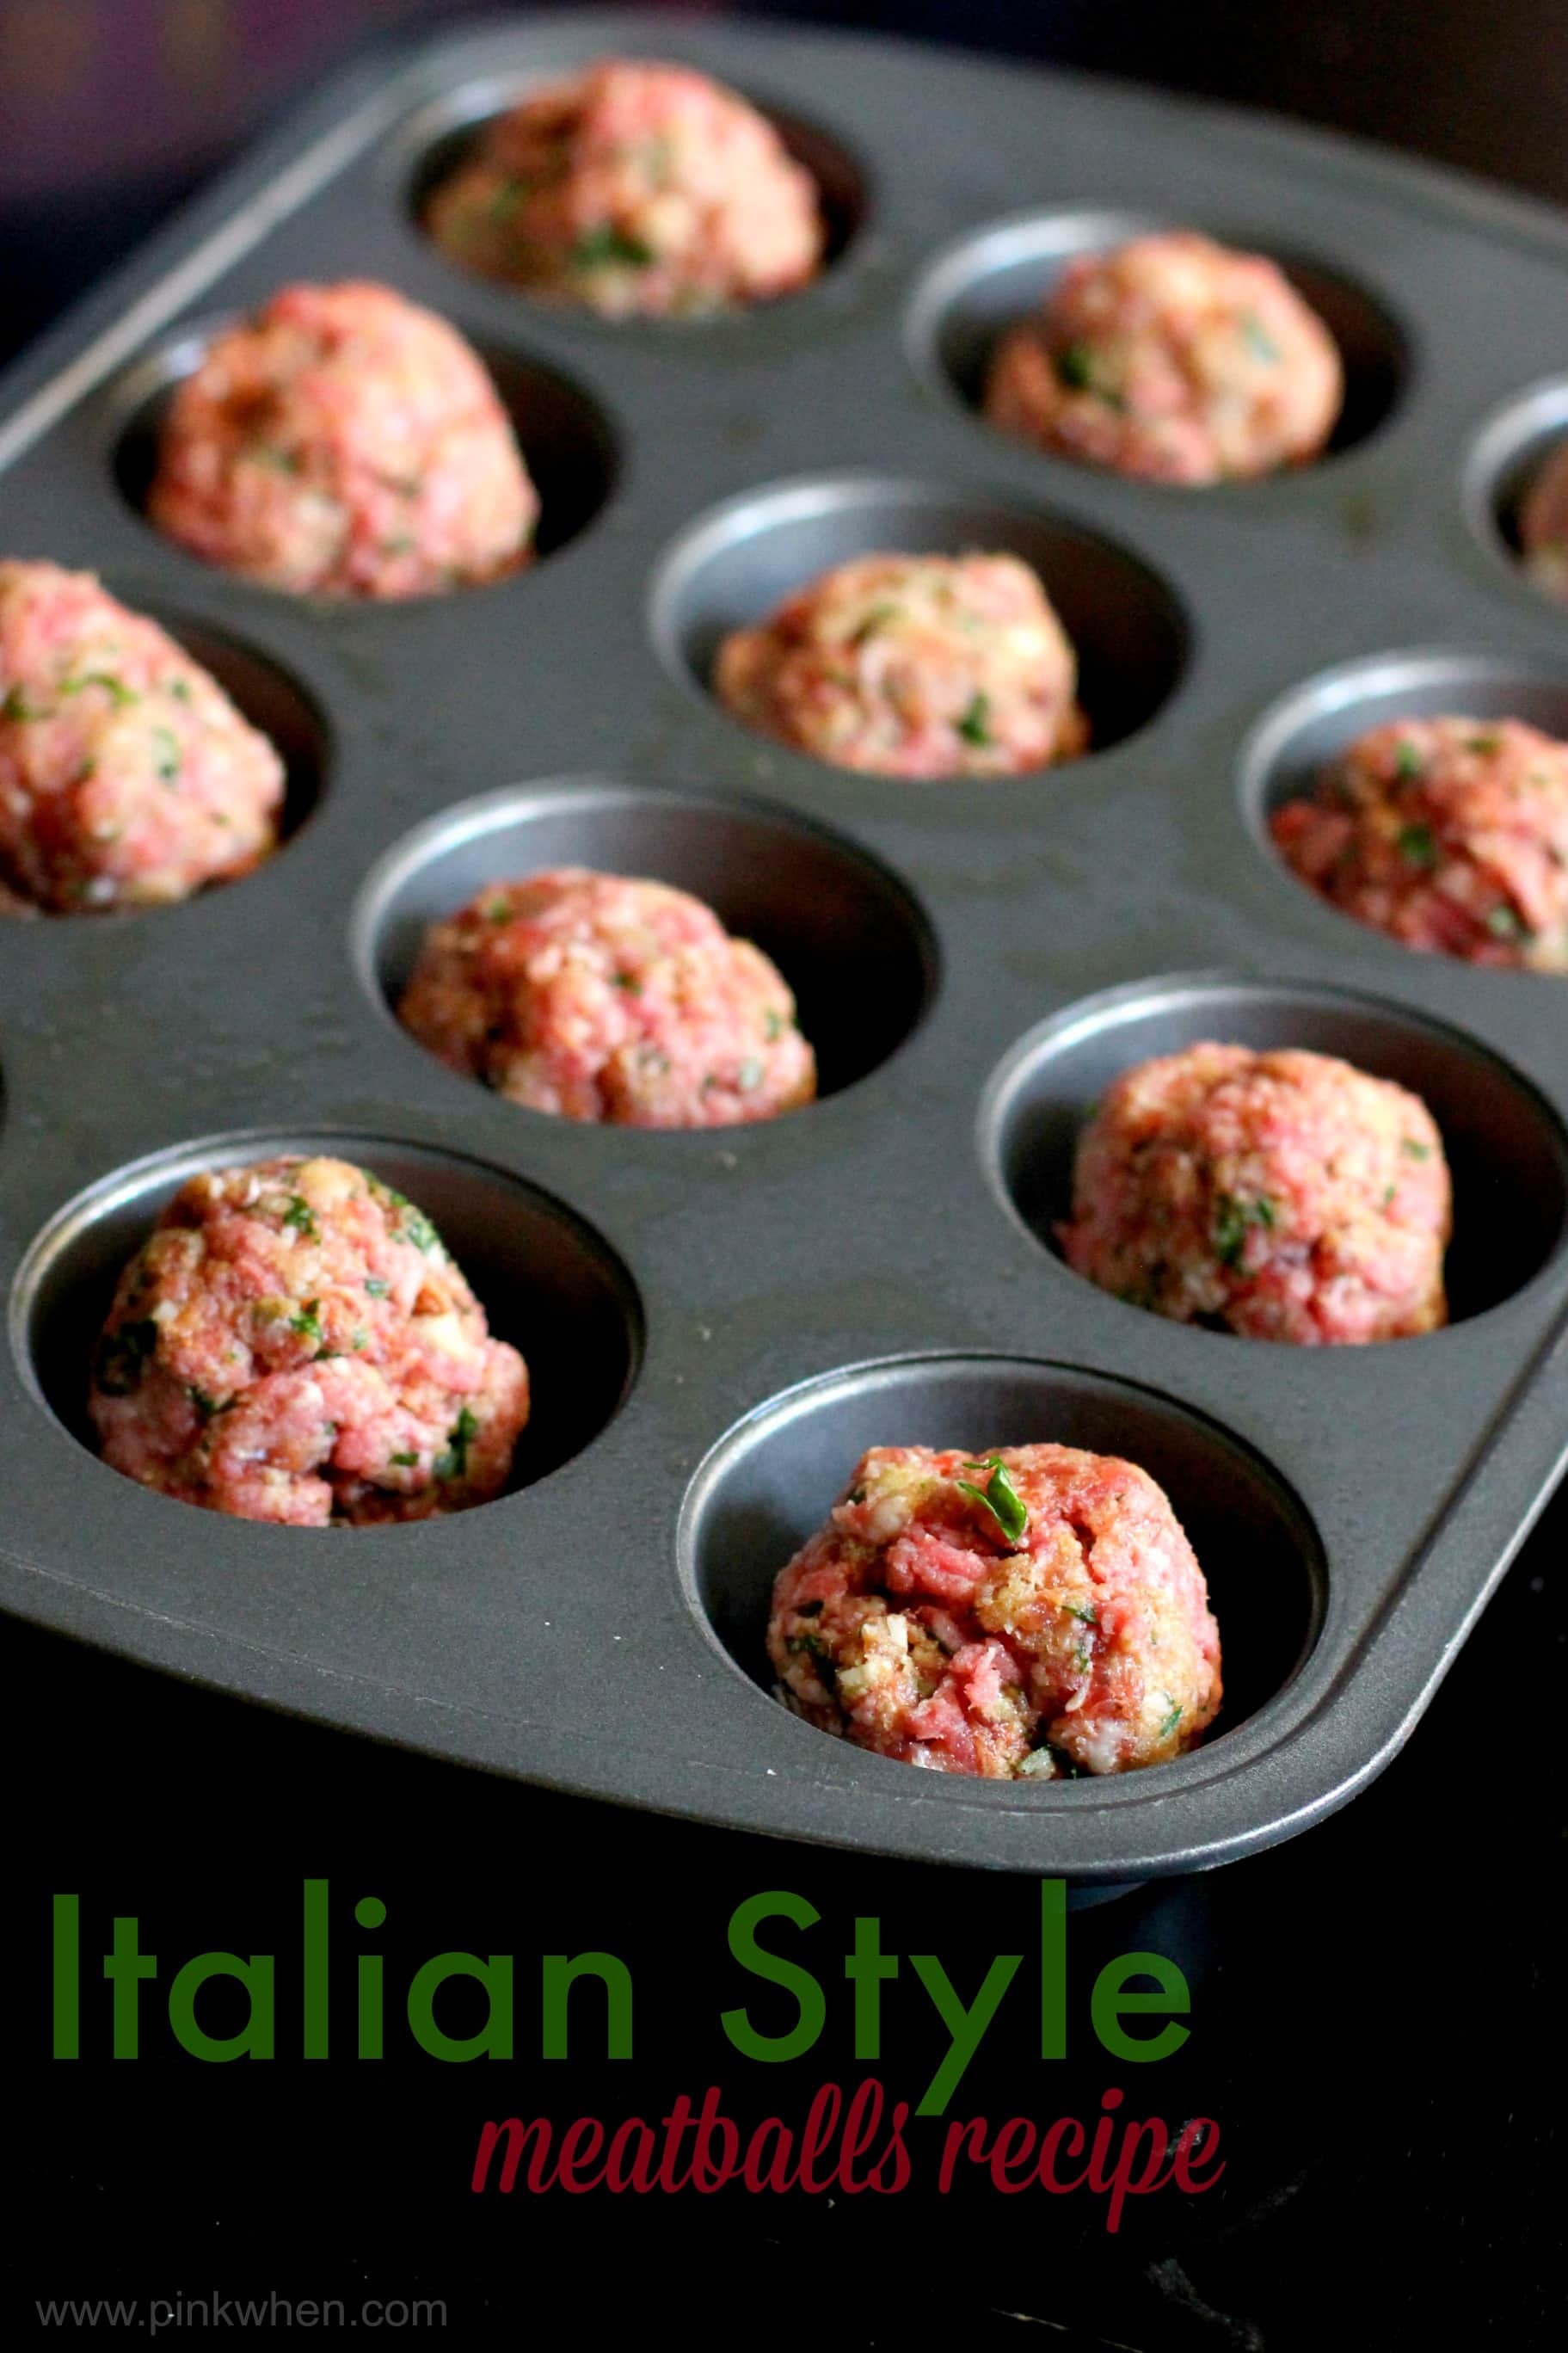 How to Make Italian Style Meatballs - PinkWhen